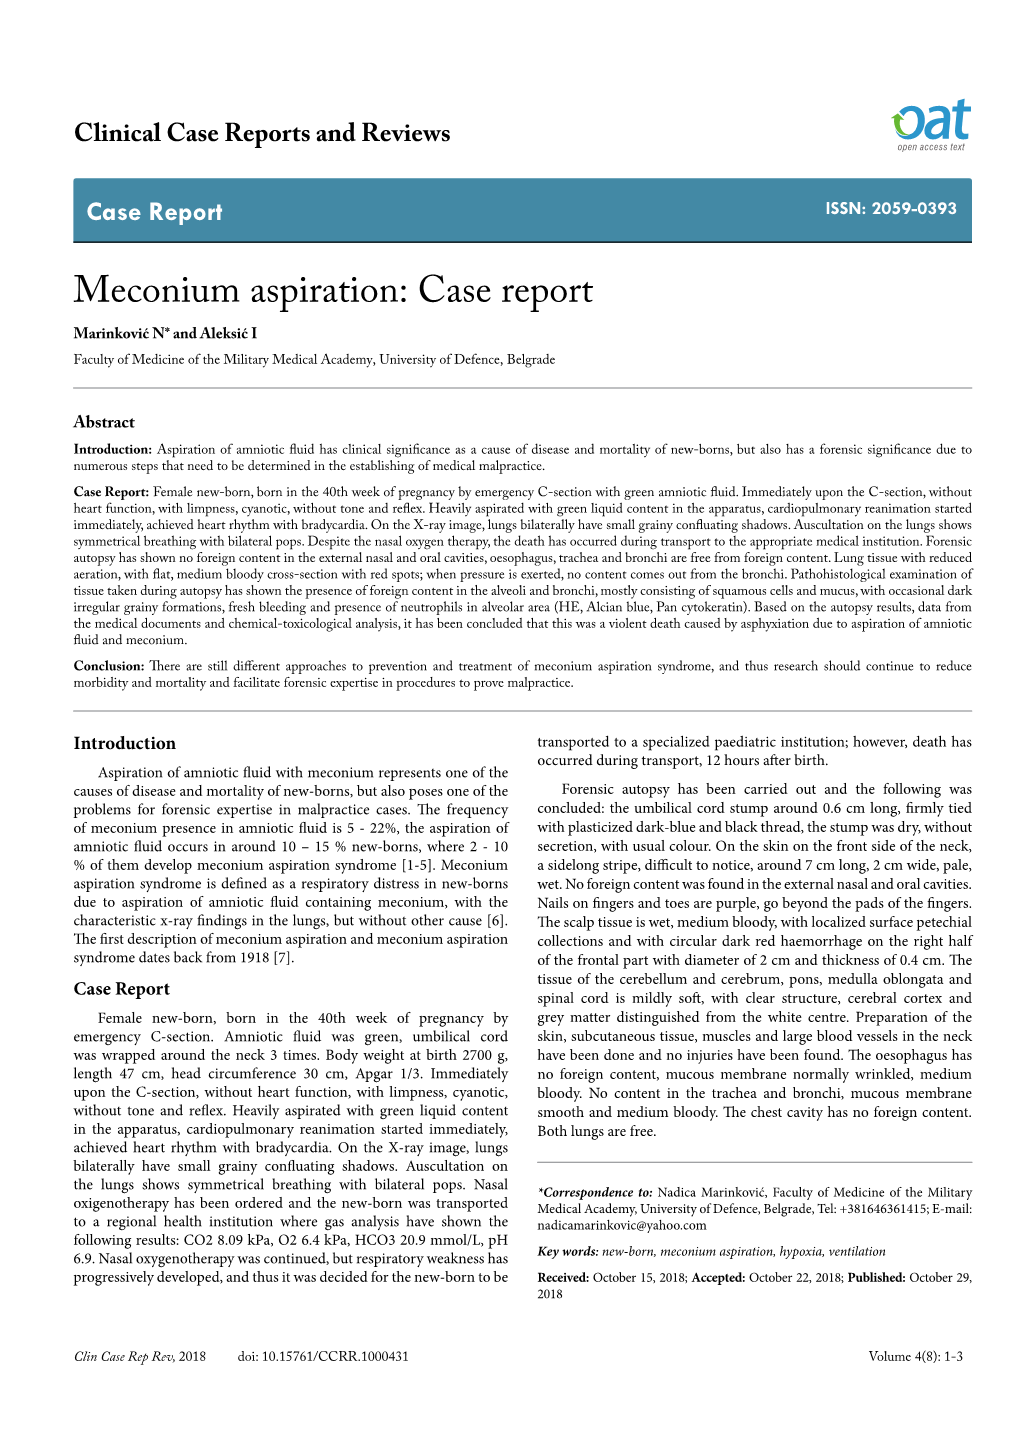 Meconium Aspiration: Case Report Marinković N* and Aleksić I Faculty of Medicine of the Military Medical Academy, University of Defence, Belgrade